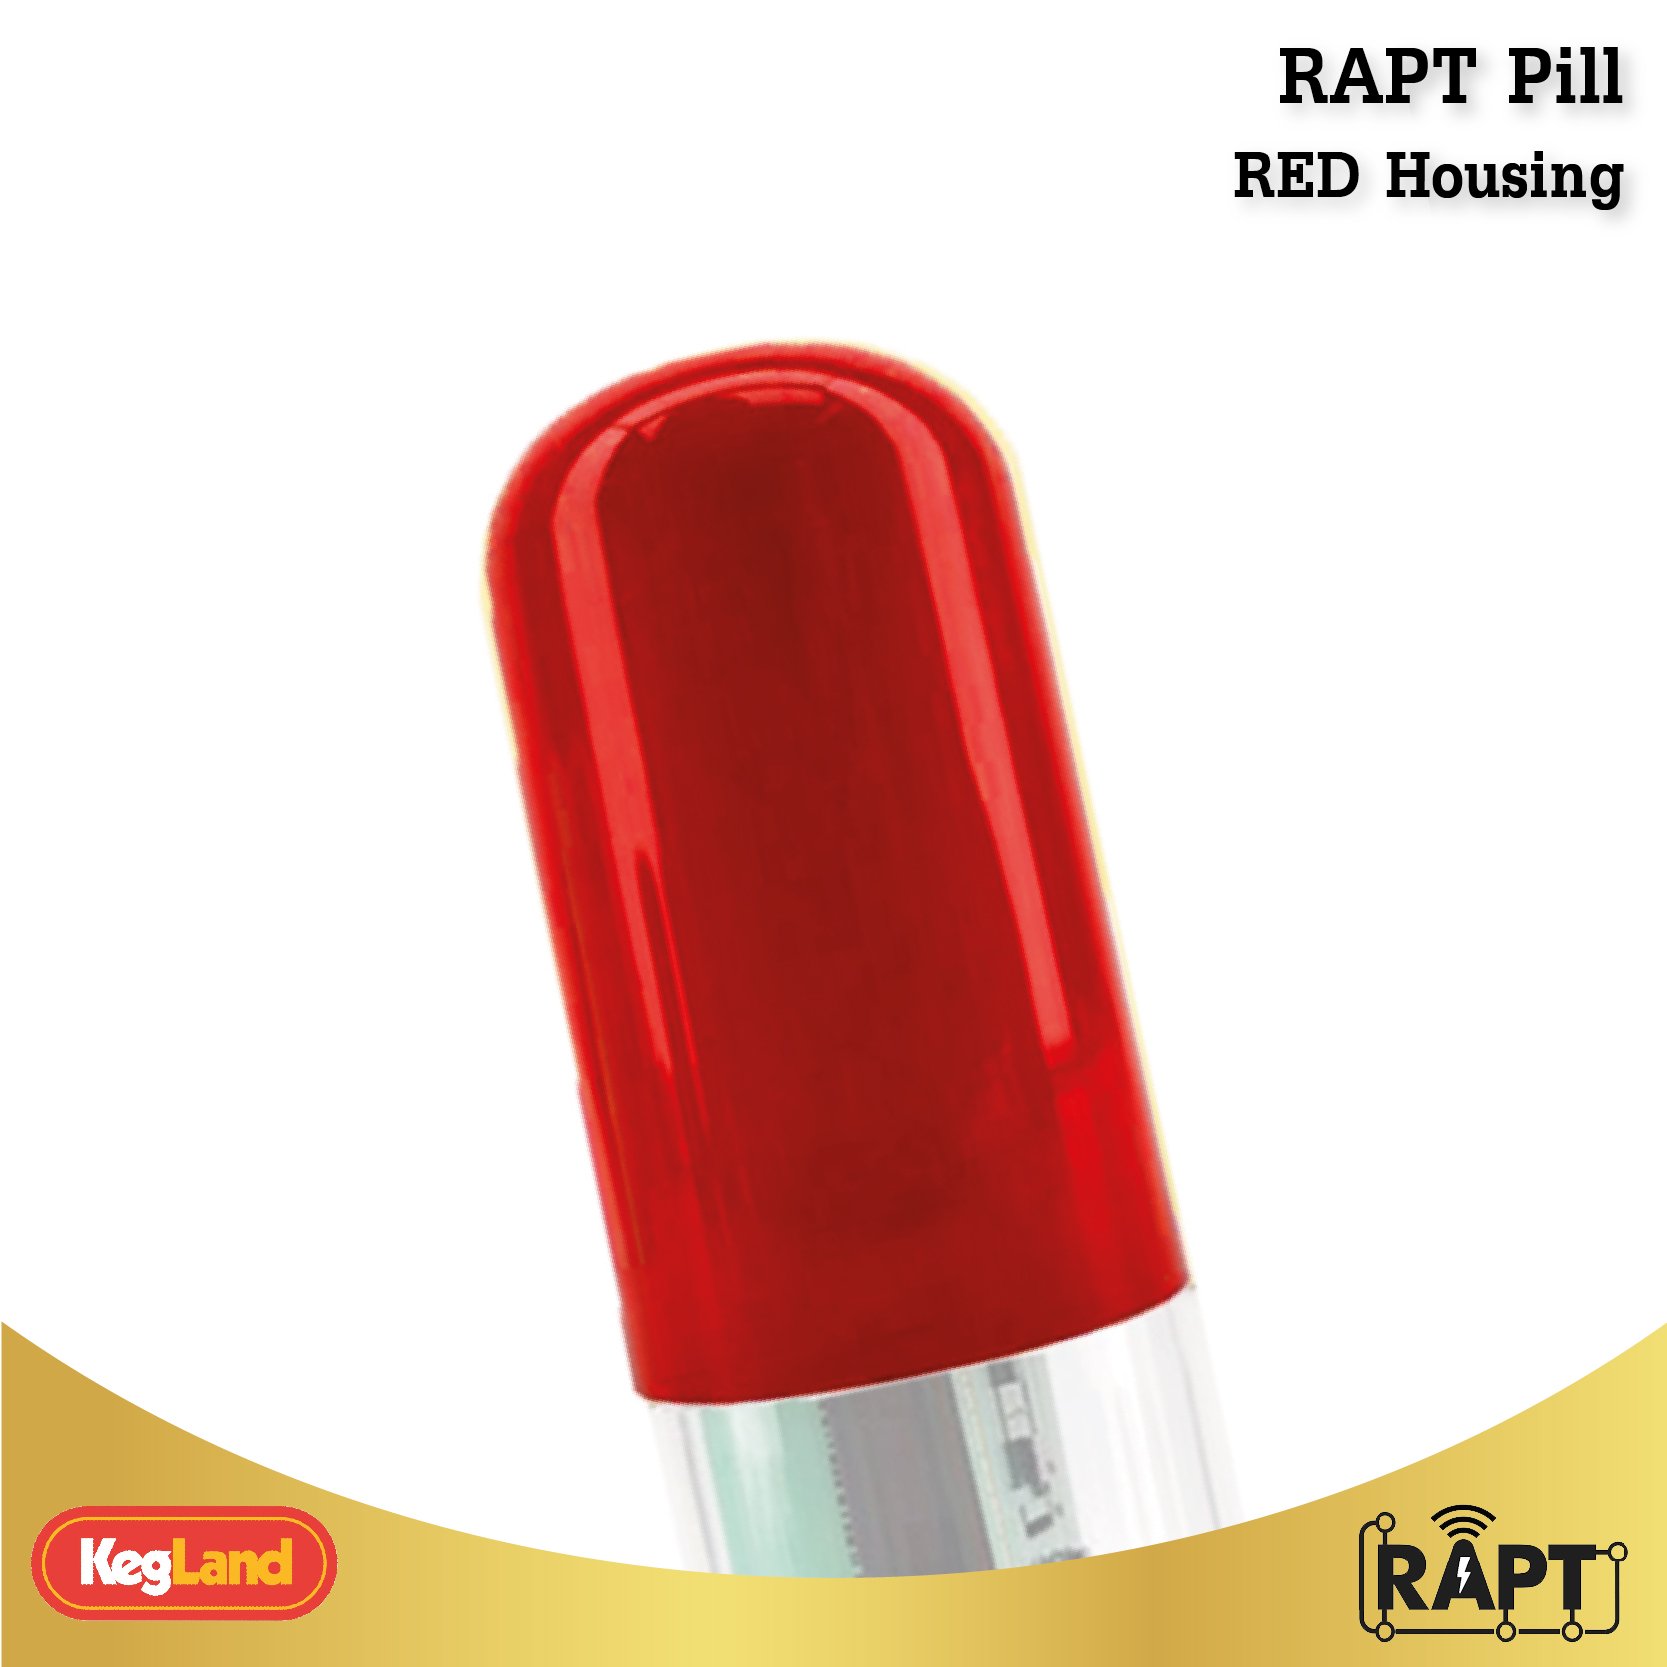 RAPT Pill - RED Housing (เฉพาะฝั่งสี)